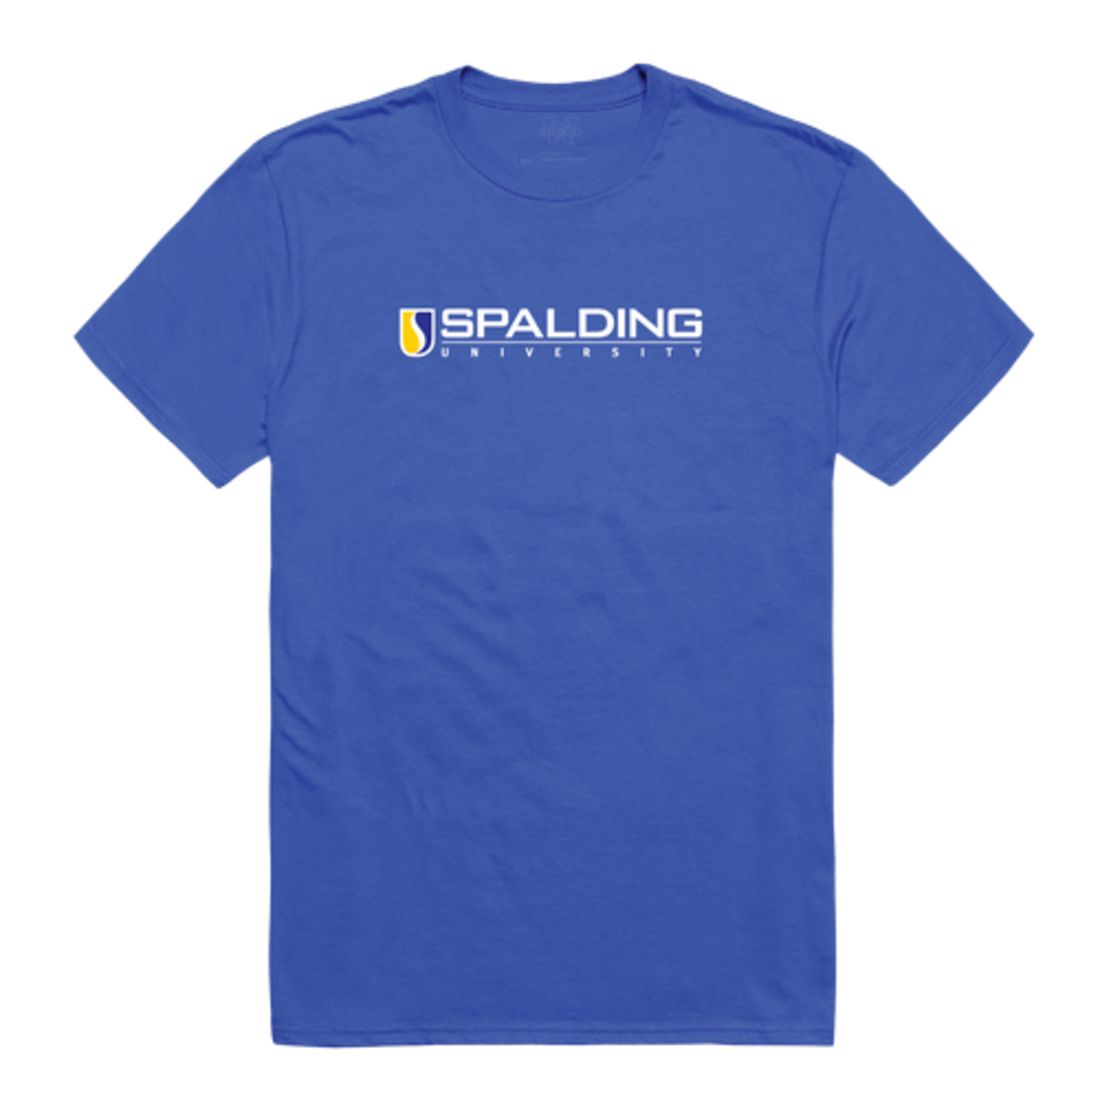 Spalding University Golden Eagles Institutional T-Shirt